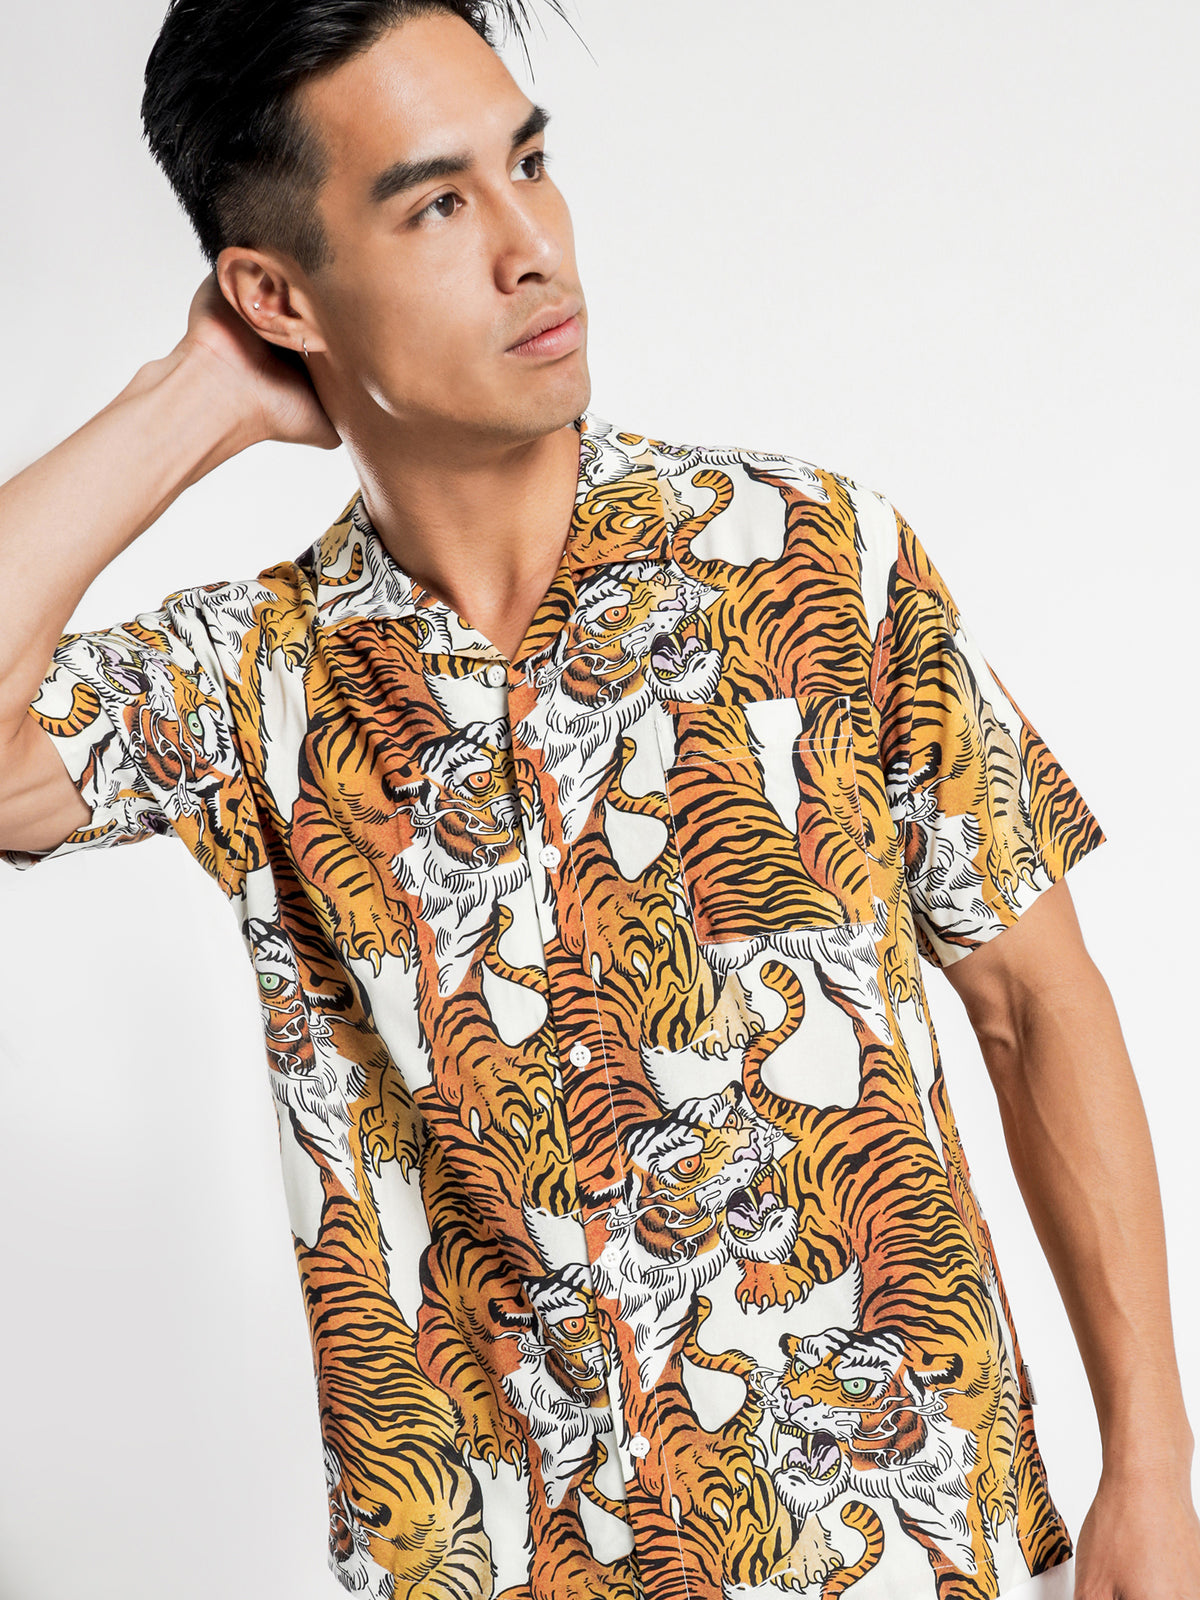 Fiasco Short Sleeve Shirt in Orange Tiger Print